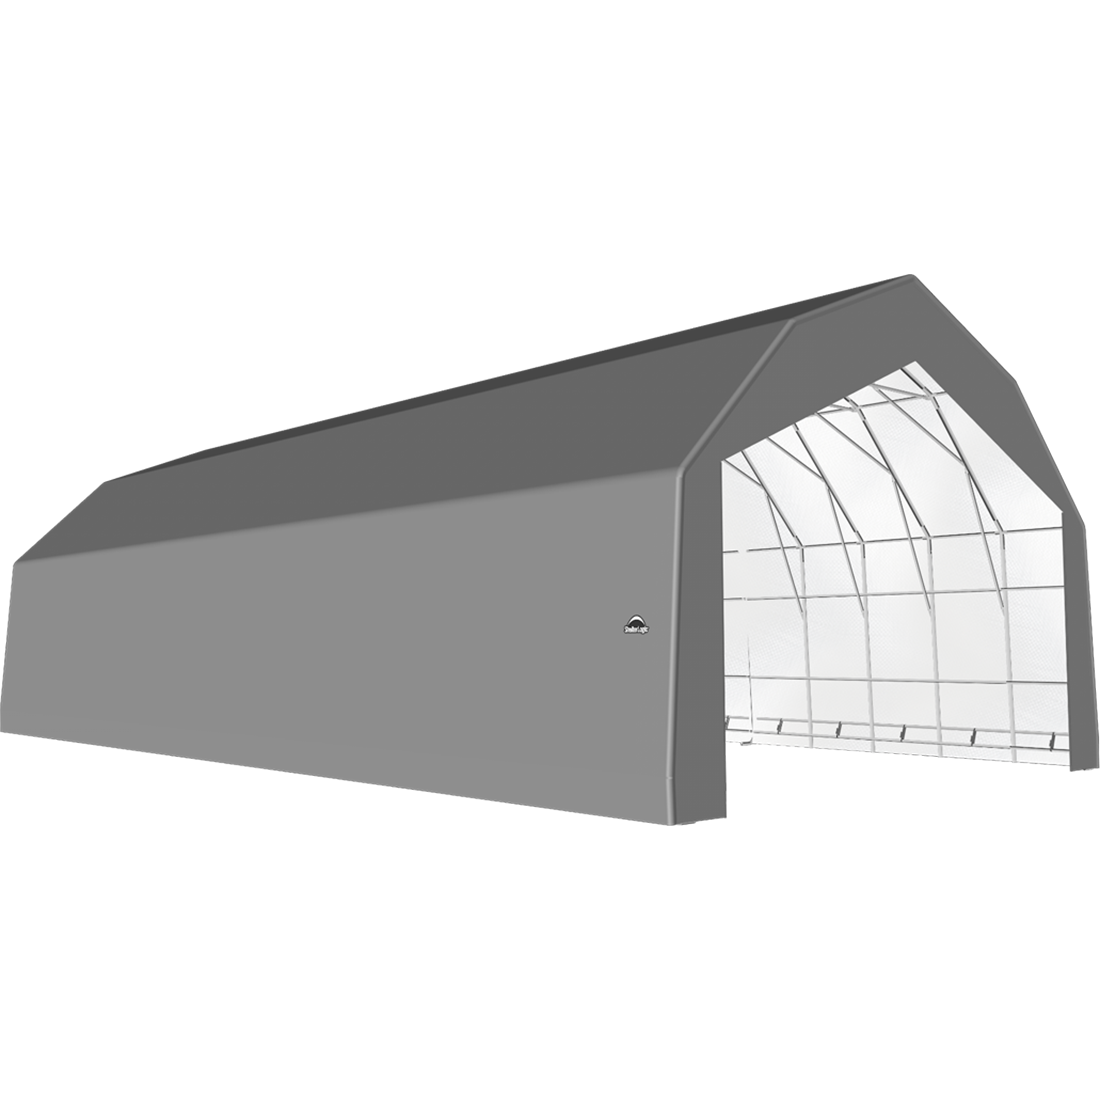 ShelterTech SP Series Barn Shelter, 30 ft. x 60 ft. x 21 ft. Heavy Duty PVC 14.5 oz. Gray